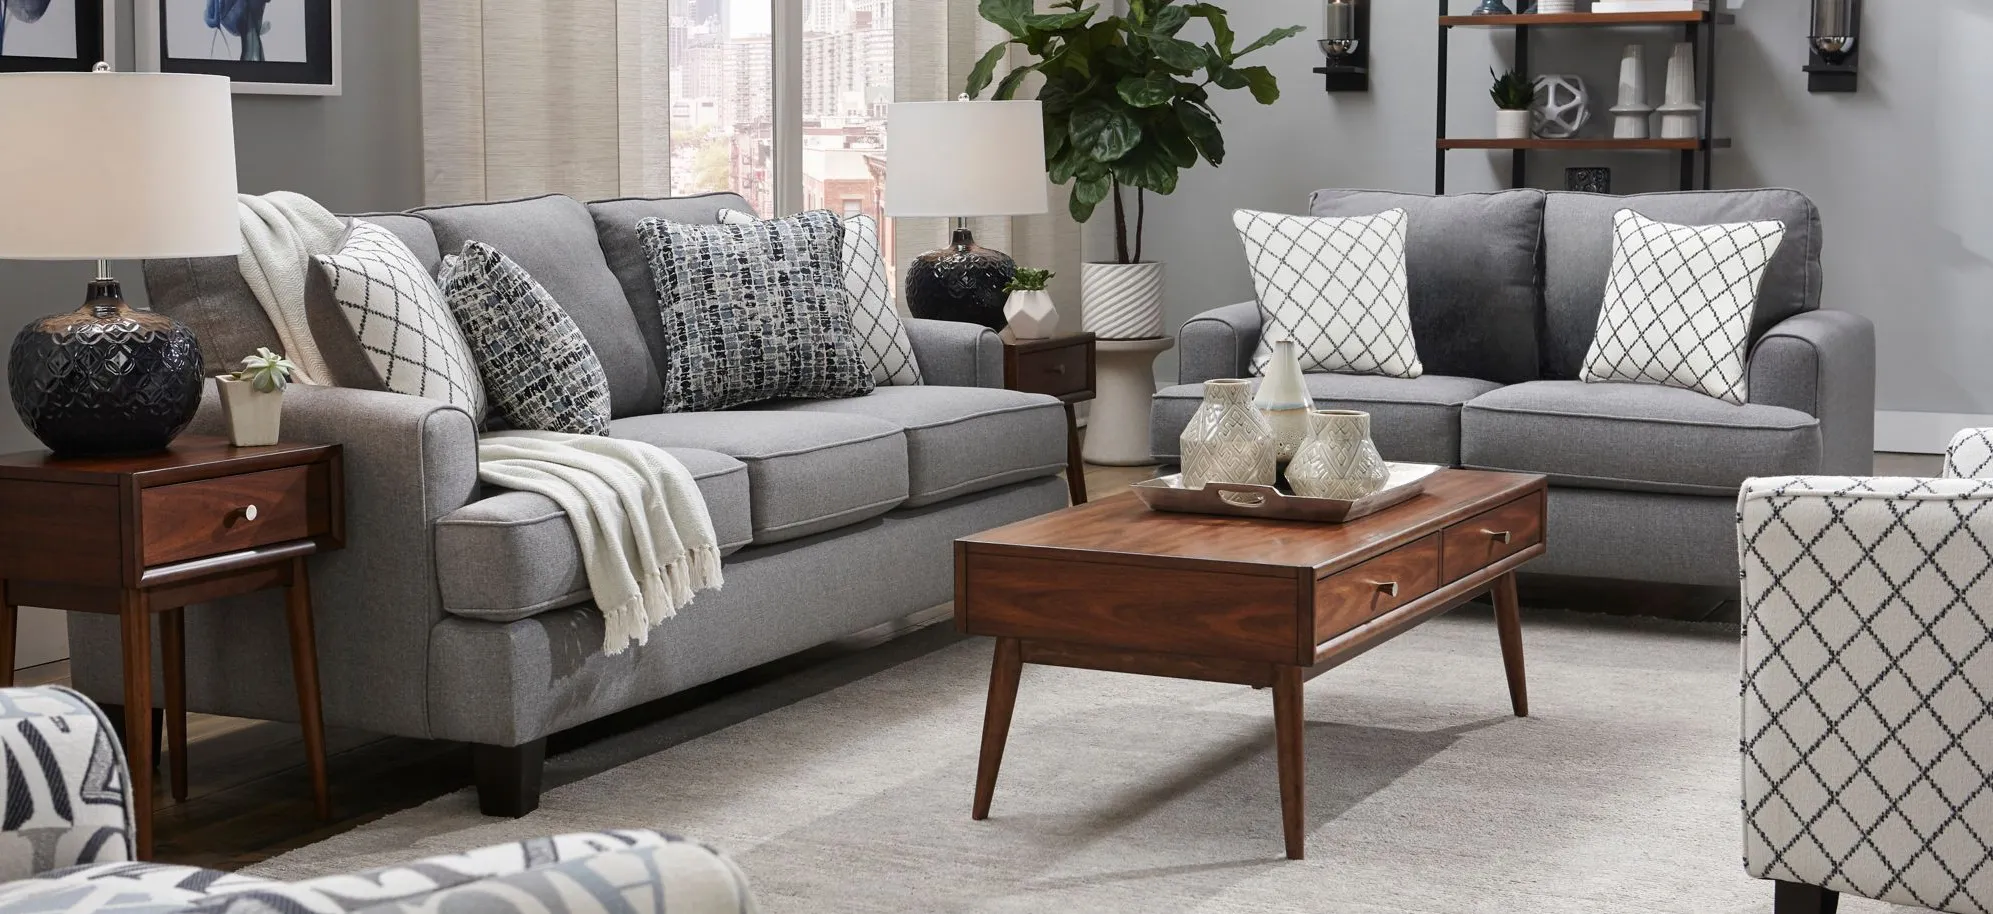 Alphie Living Room Set in Macarena Cadet by Fusion Furniture